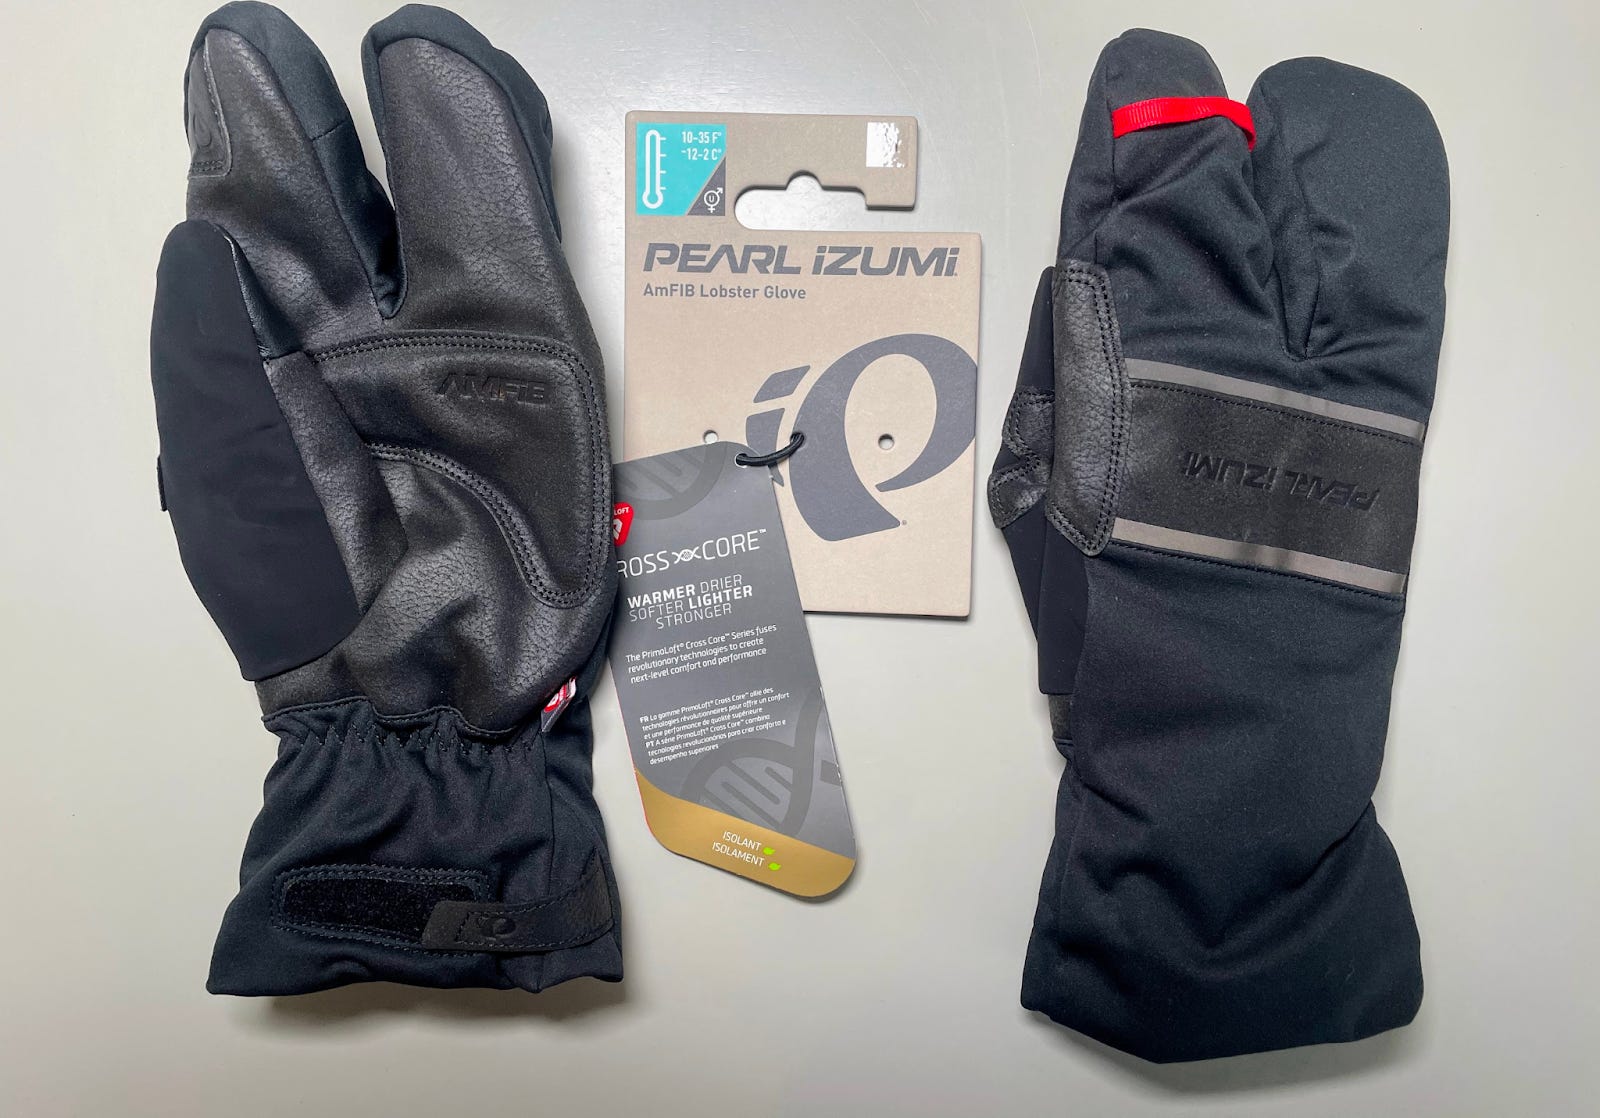 AmFIB Lobster Cycling Gloves